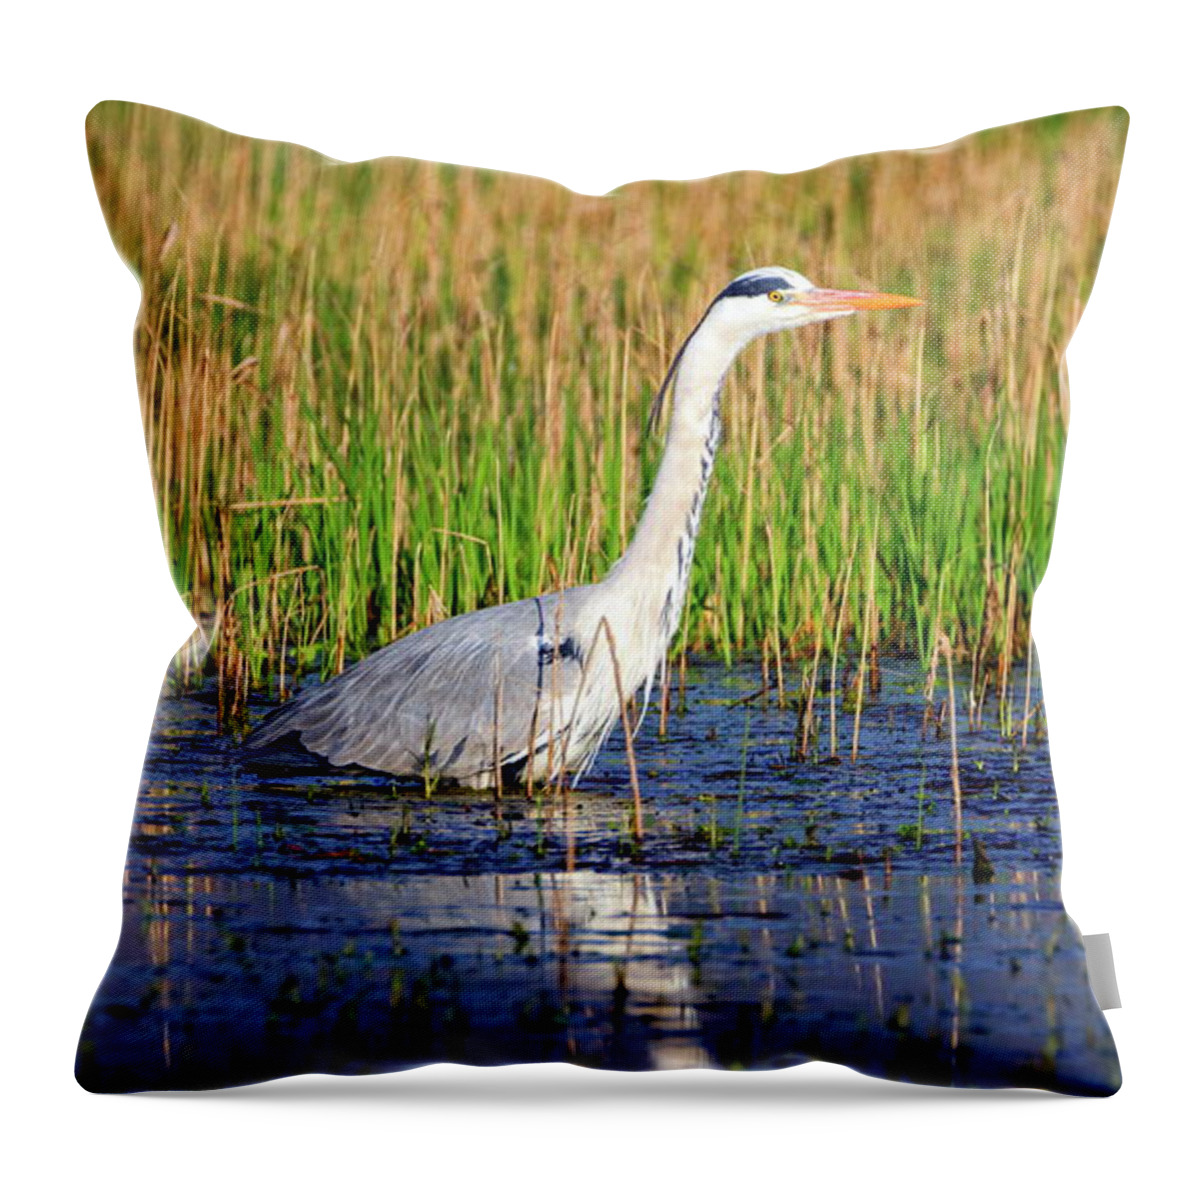 Heron Throw Pillow featuring the photograph Grey heron, ardea cinerea, in a pond #1 by Elenarts - Elena Duvernay photo